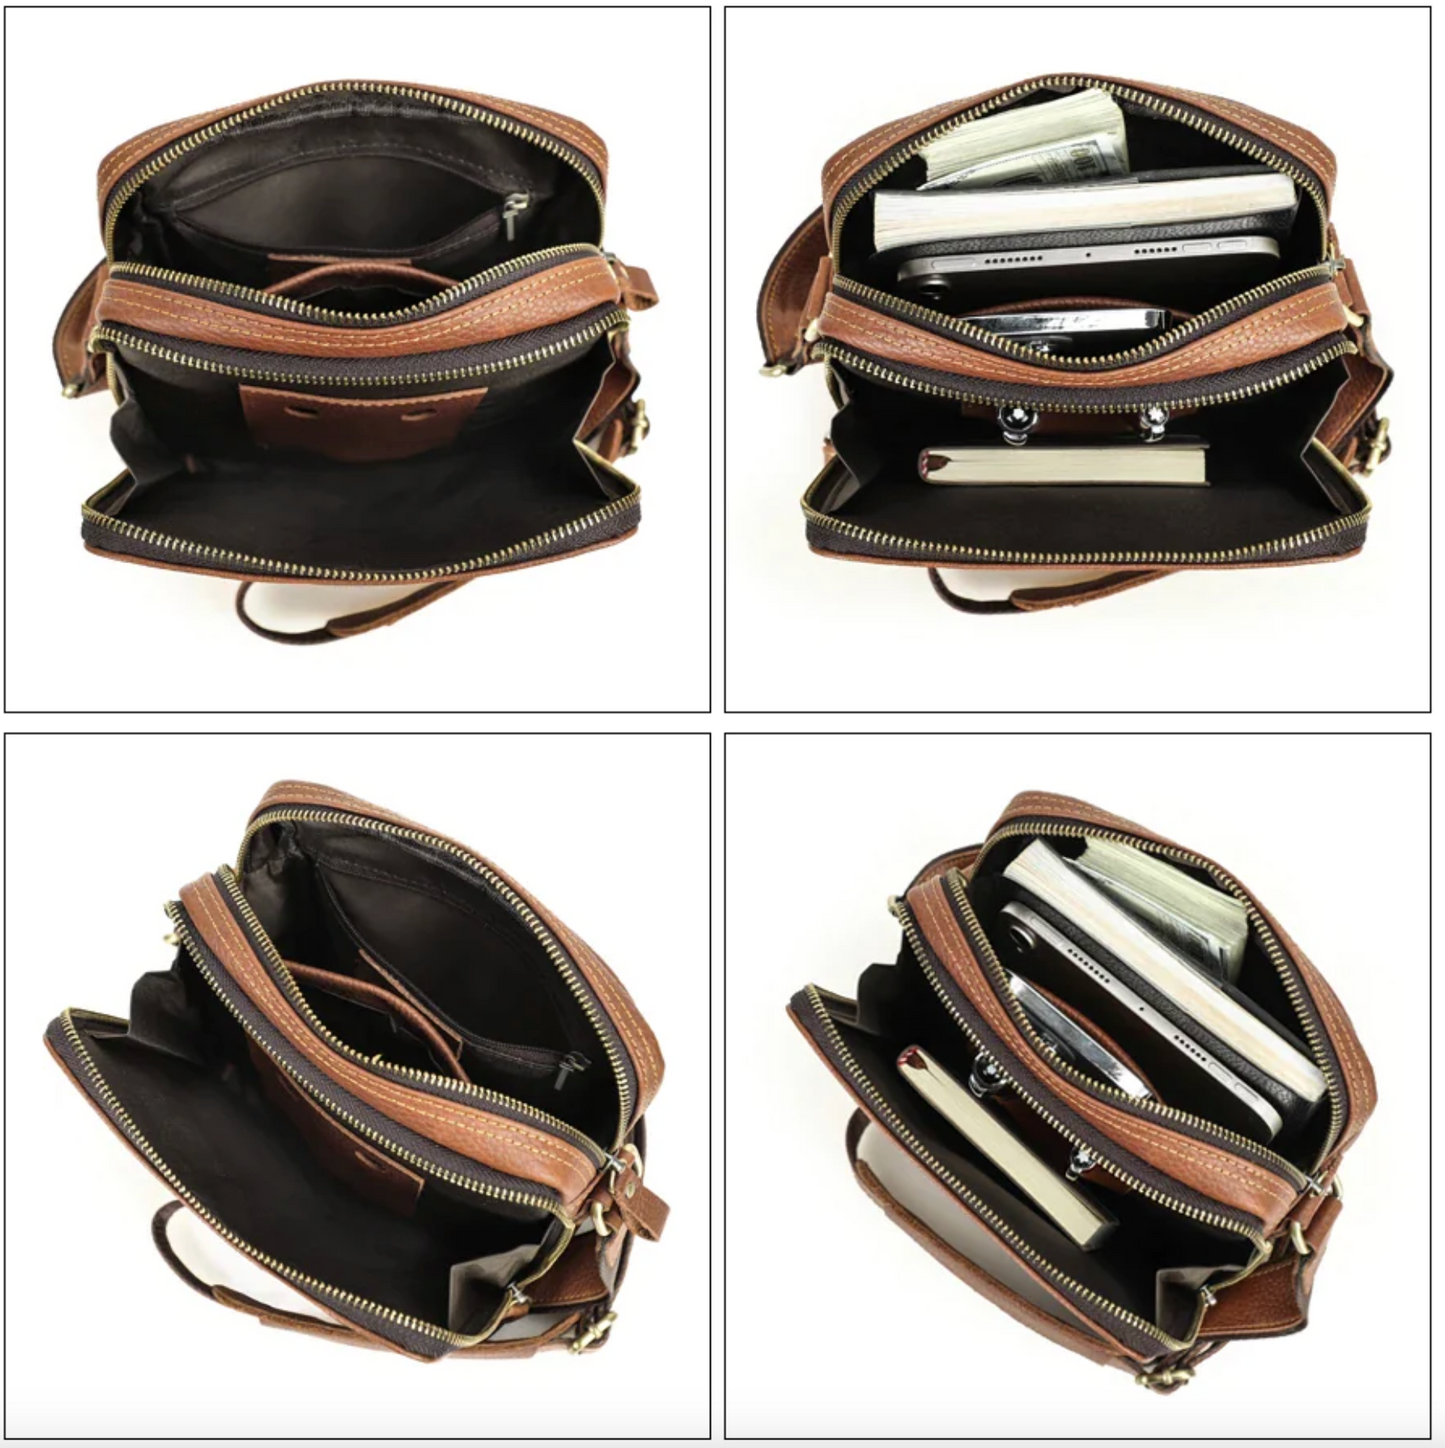 Handmade men's bag made of genuine leather